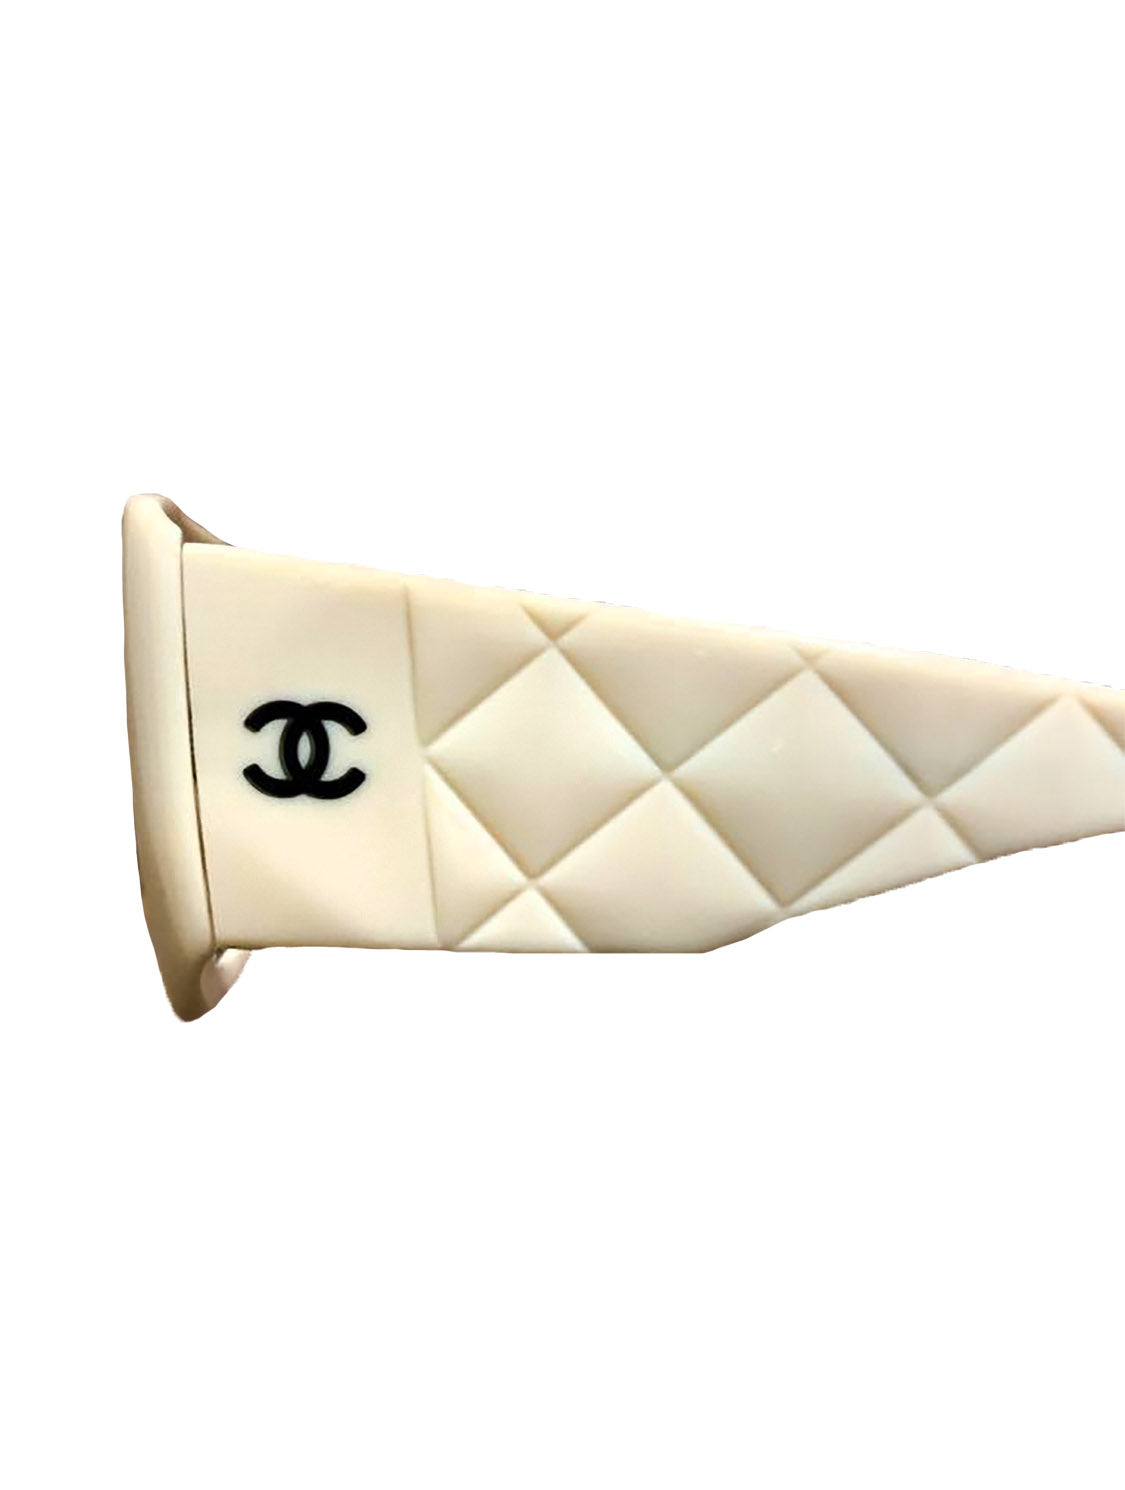 Chanel 2000s Cream Tortoise Rare Acetate Sunglasses